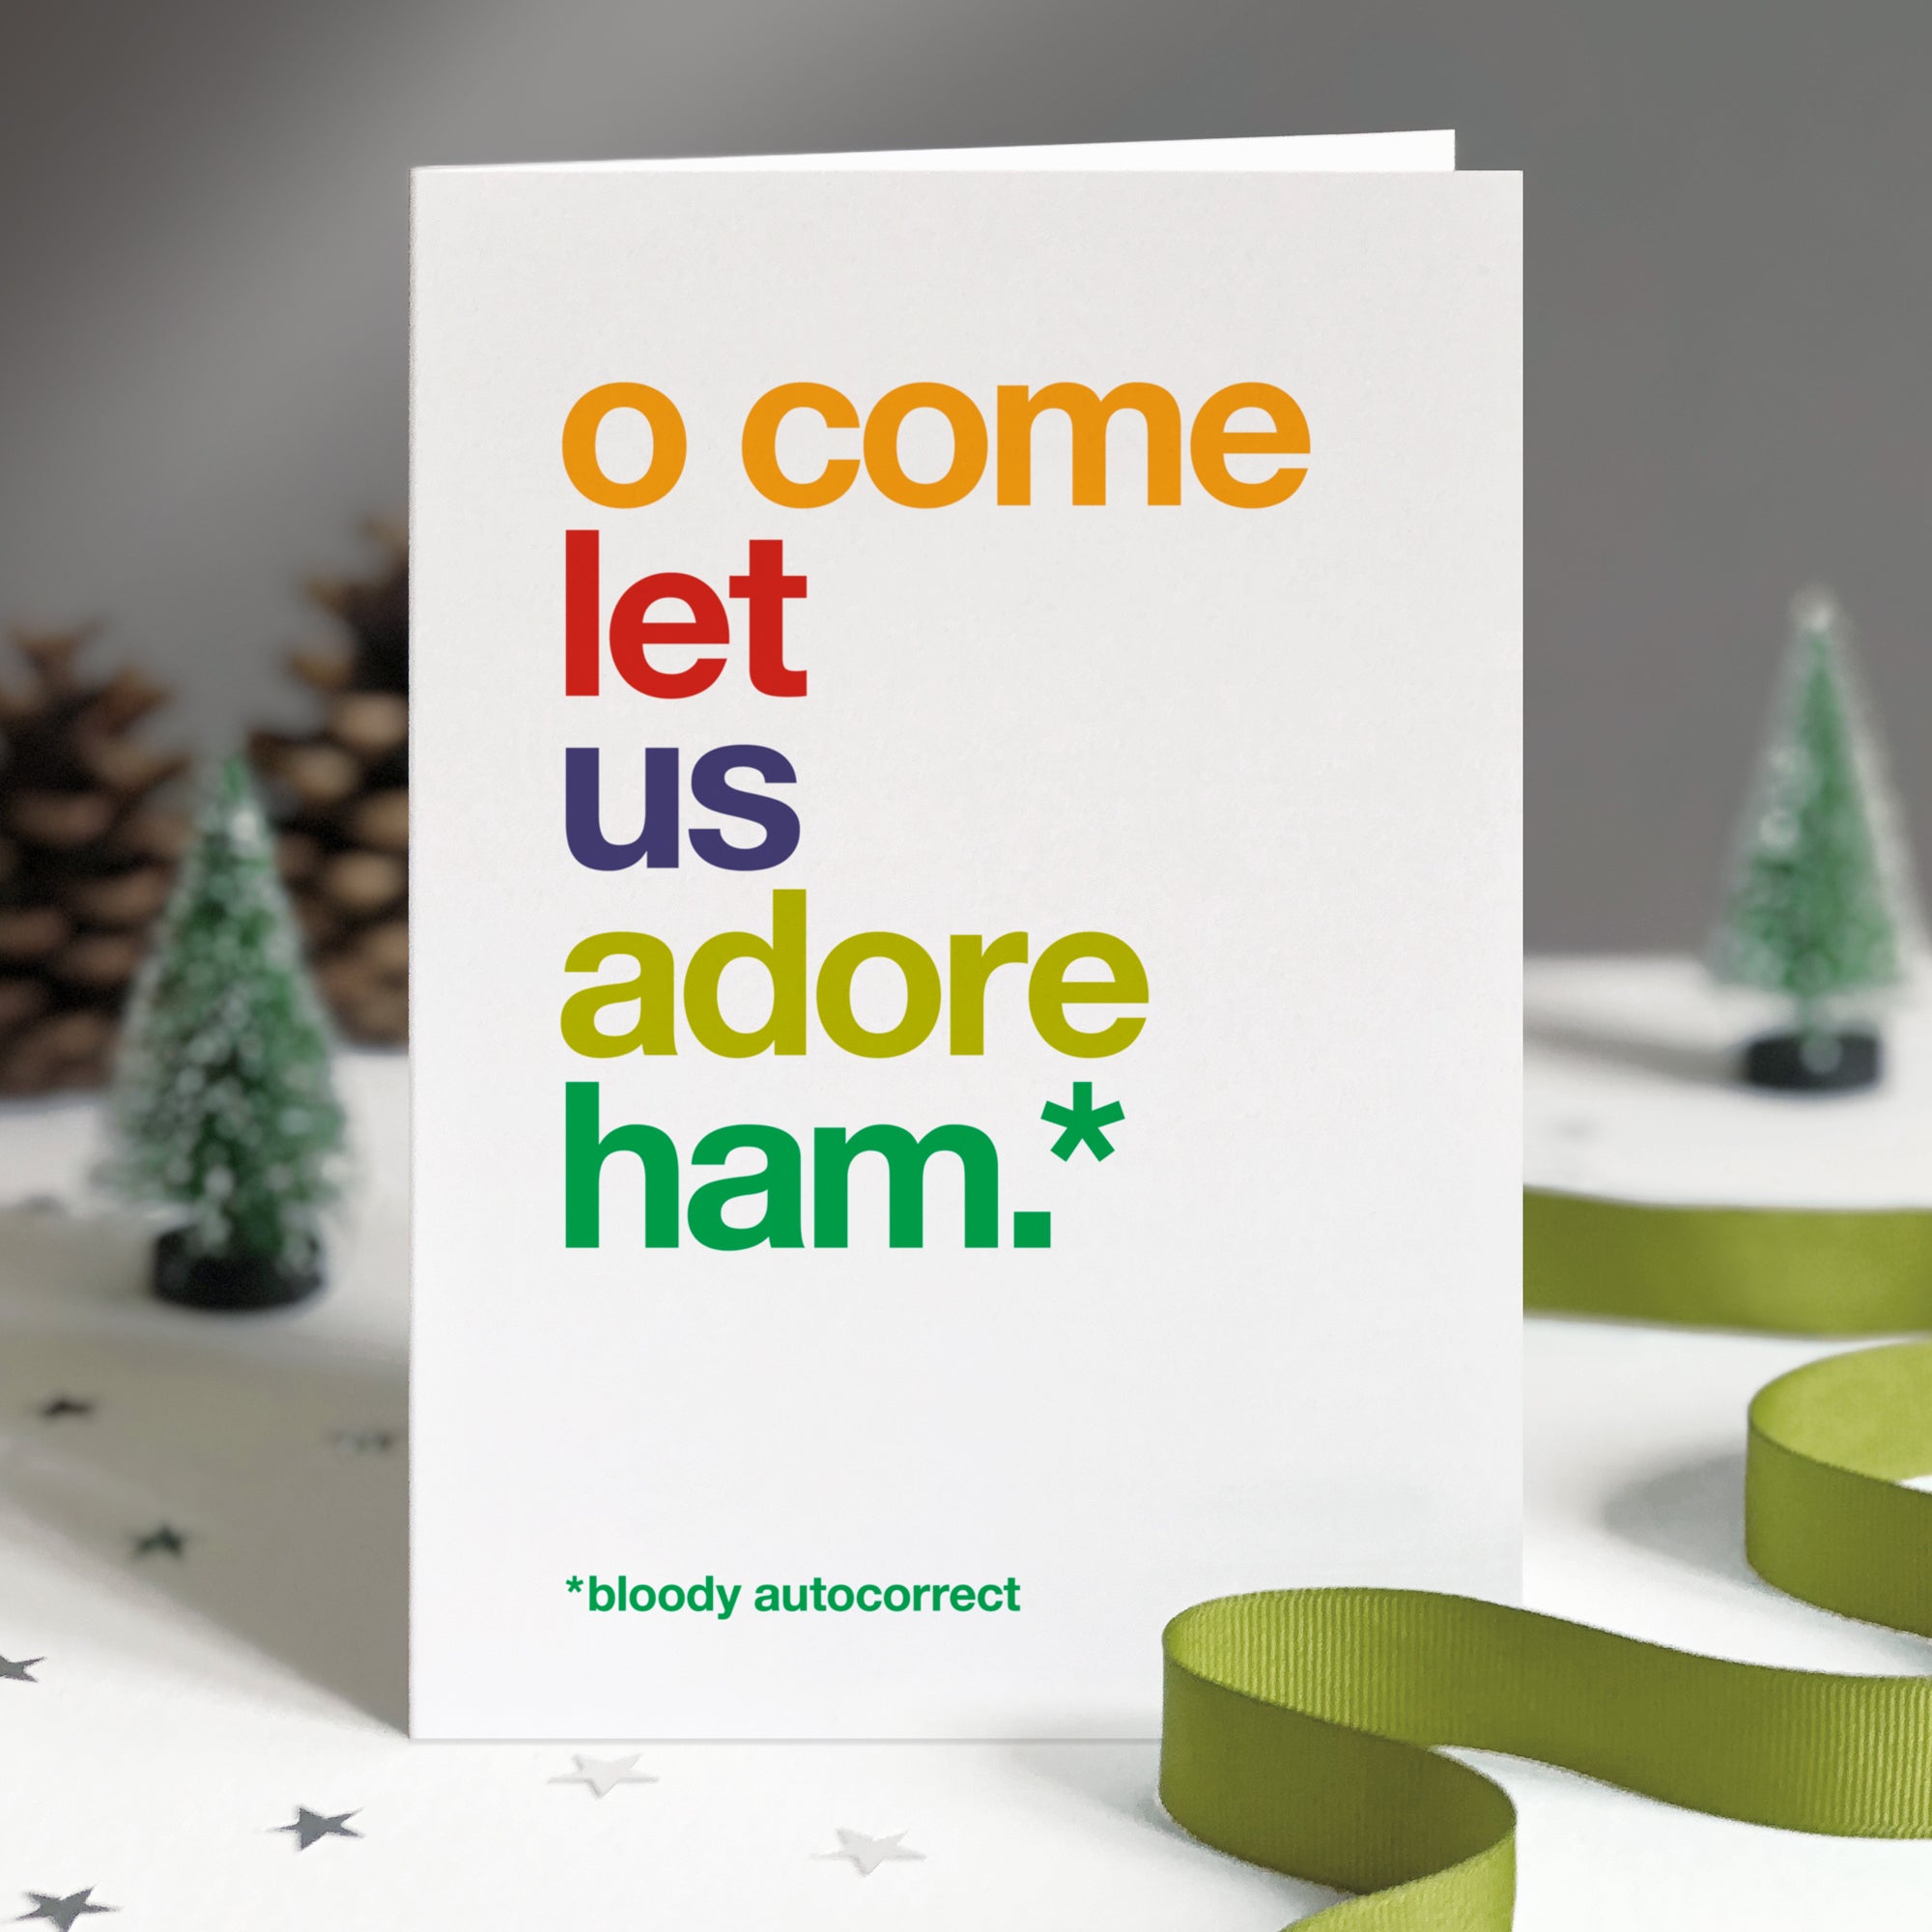 Funny christmas card autocorrected to 'o come let us adore ham'.